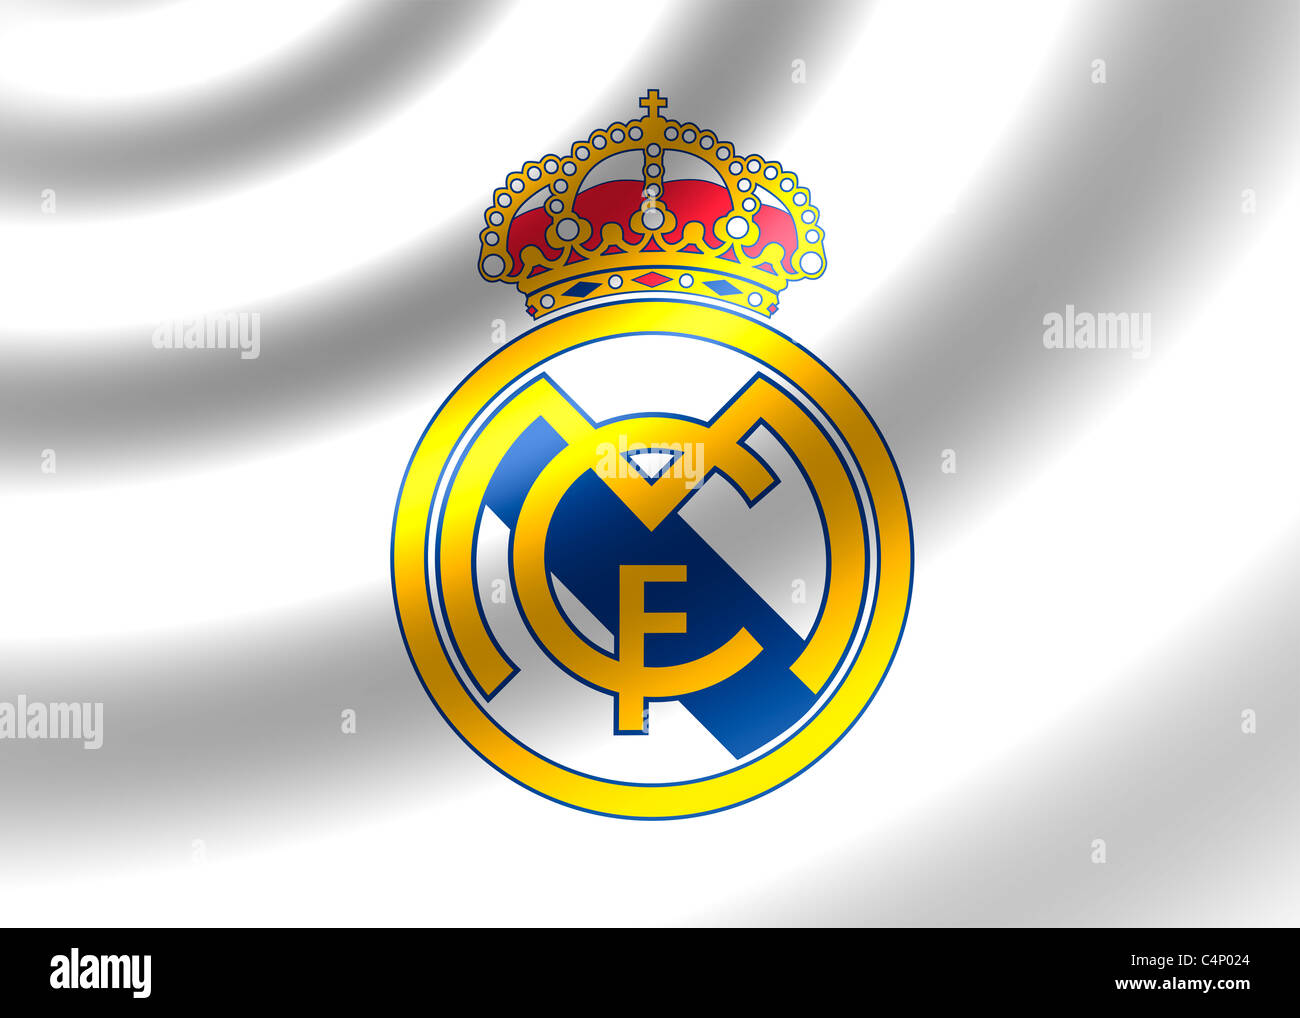  Real  Madrid  CF drapeau  symbole logo Photo Stock Alamy